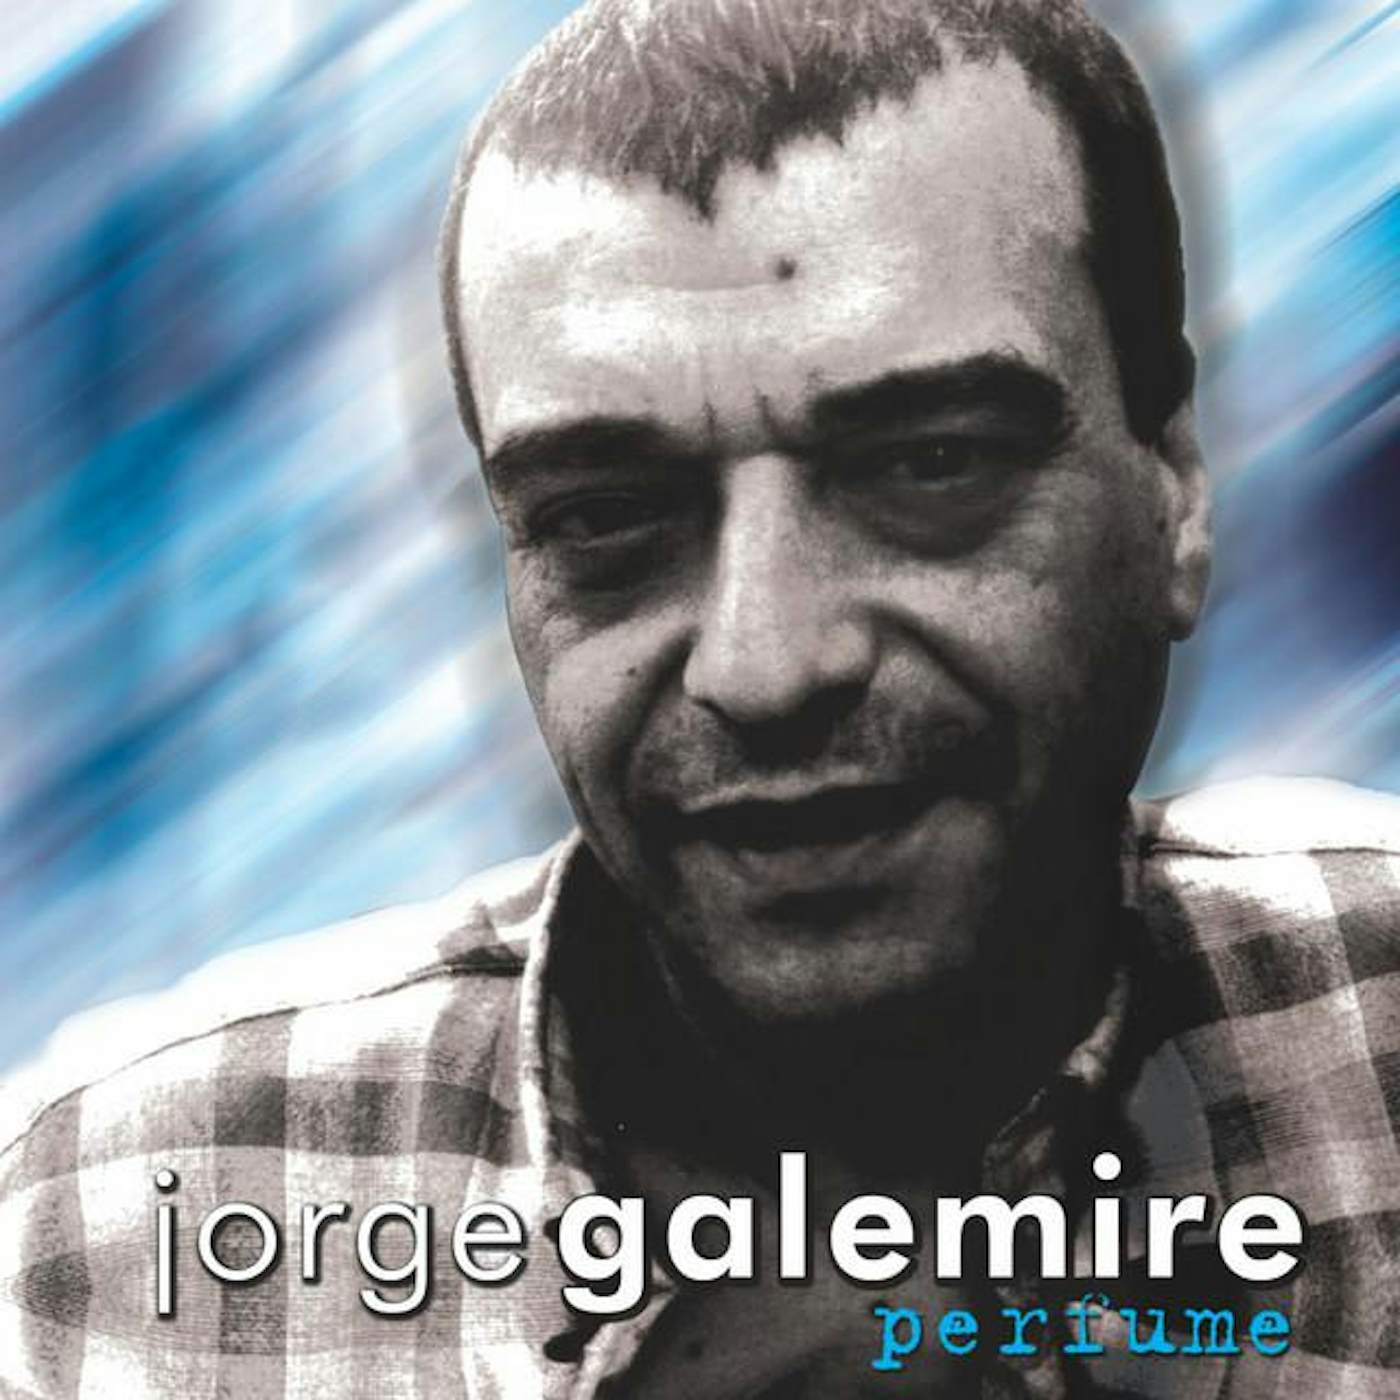 Jorge Galemire